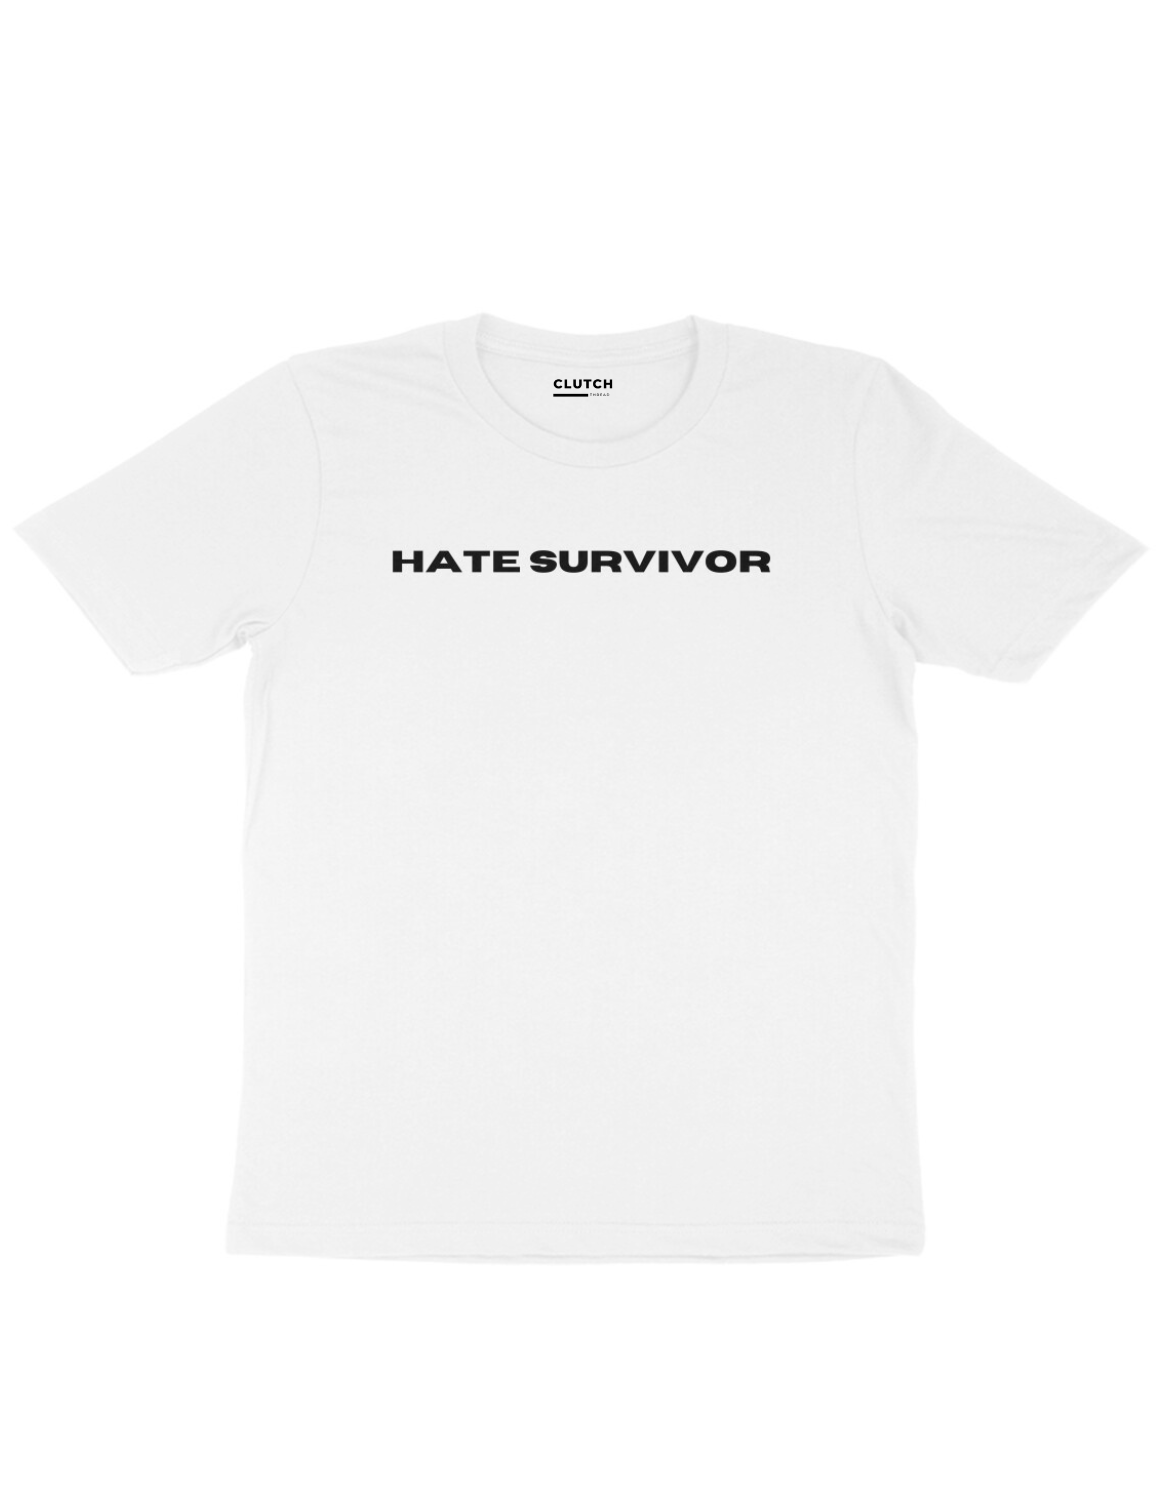 Hate Survivor- Half Sleeve T-Shirt